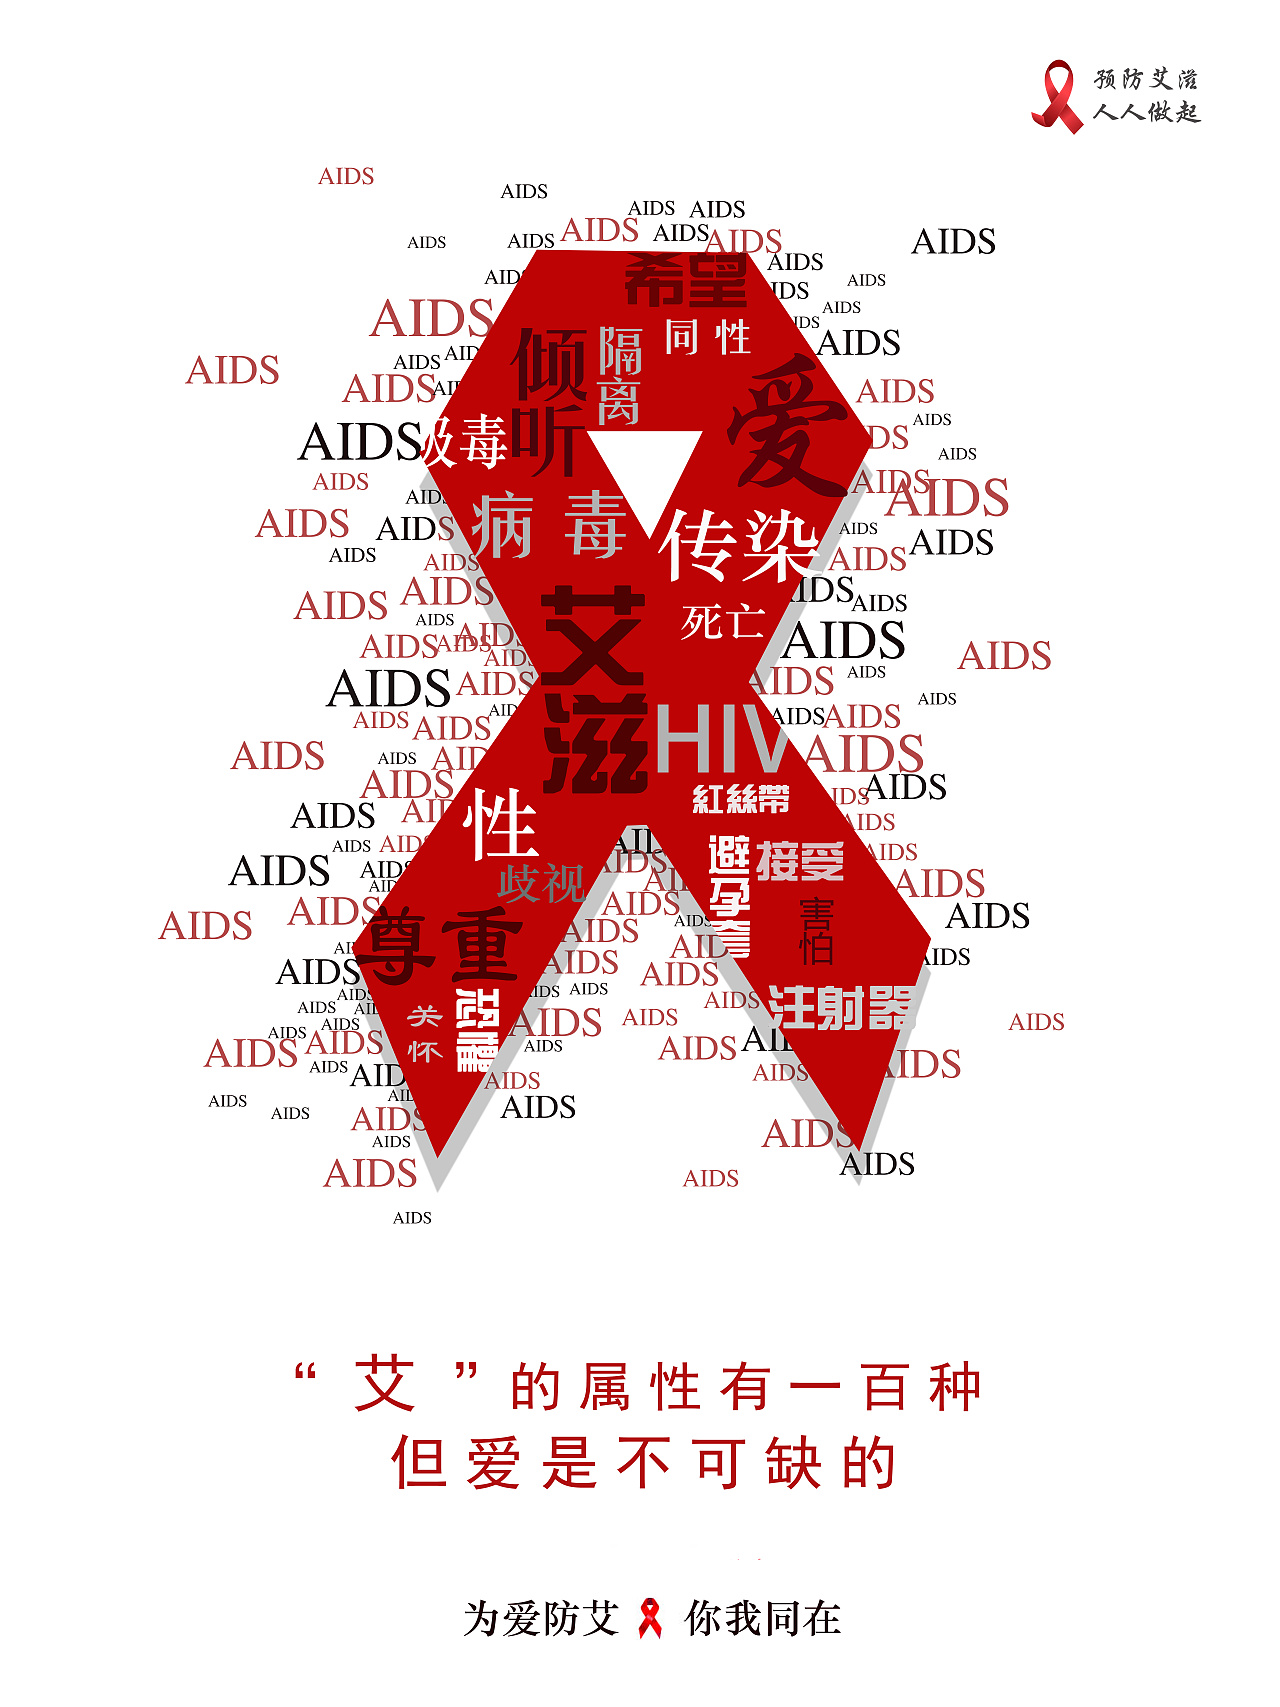 J Int <font color="red">AIDS</font> Soc：社区和个人因素与HIV发病率的相关性